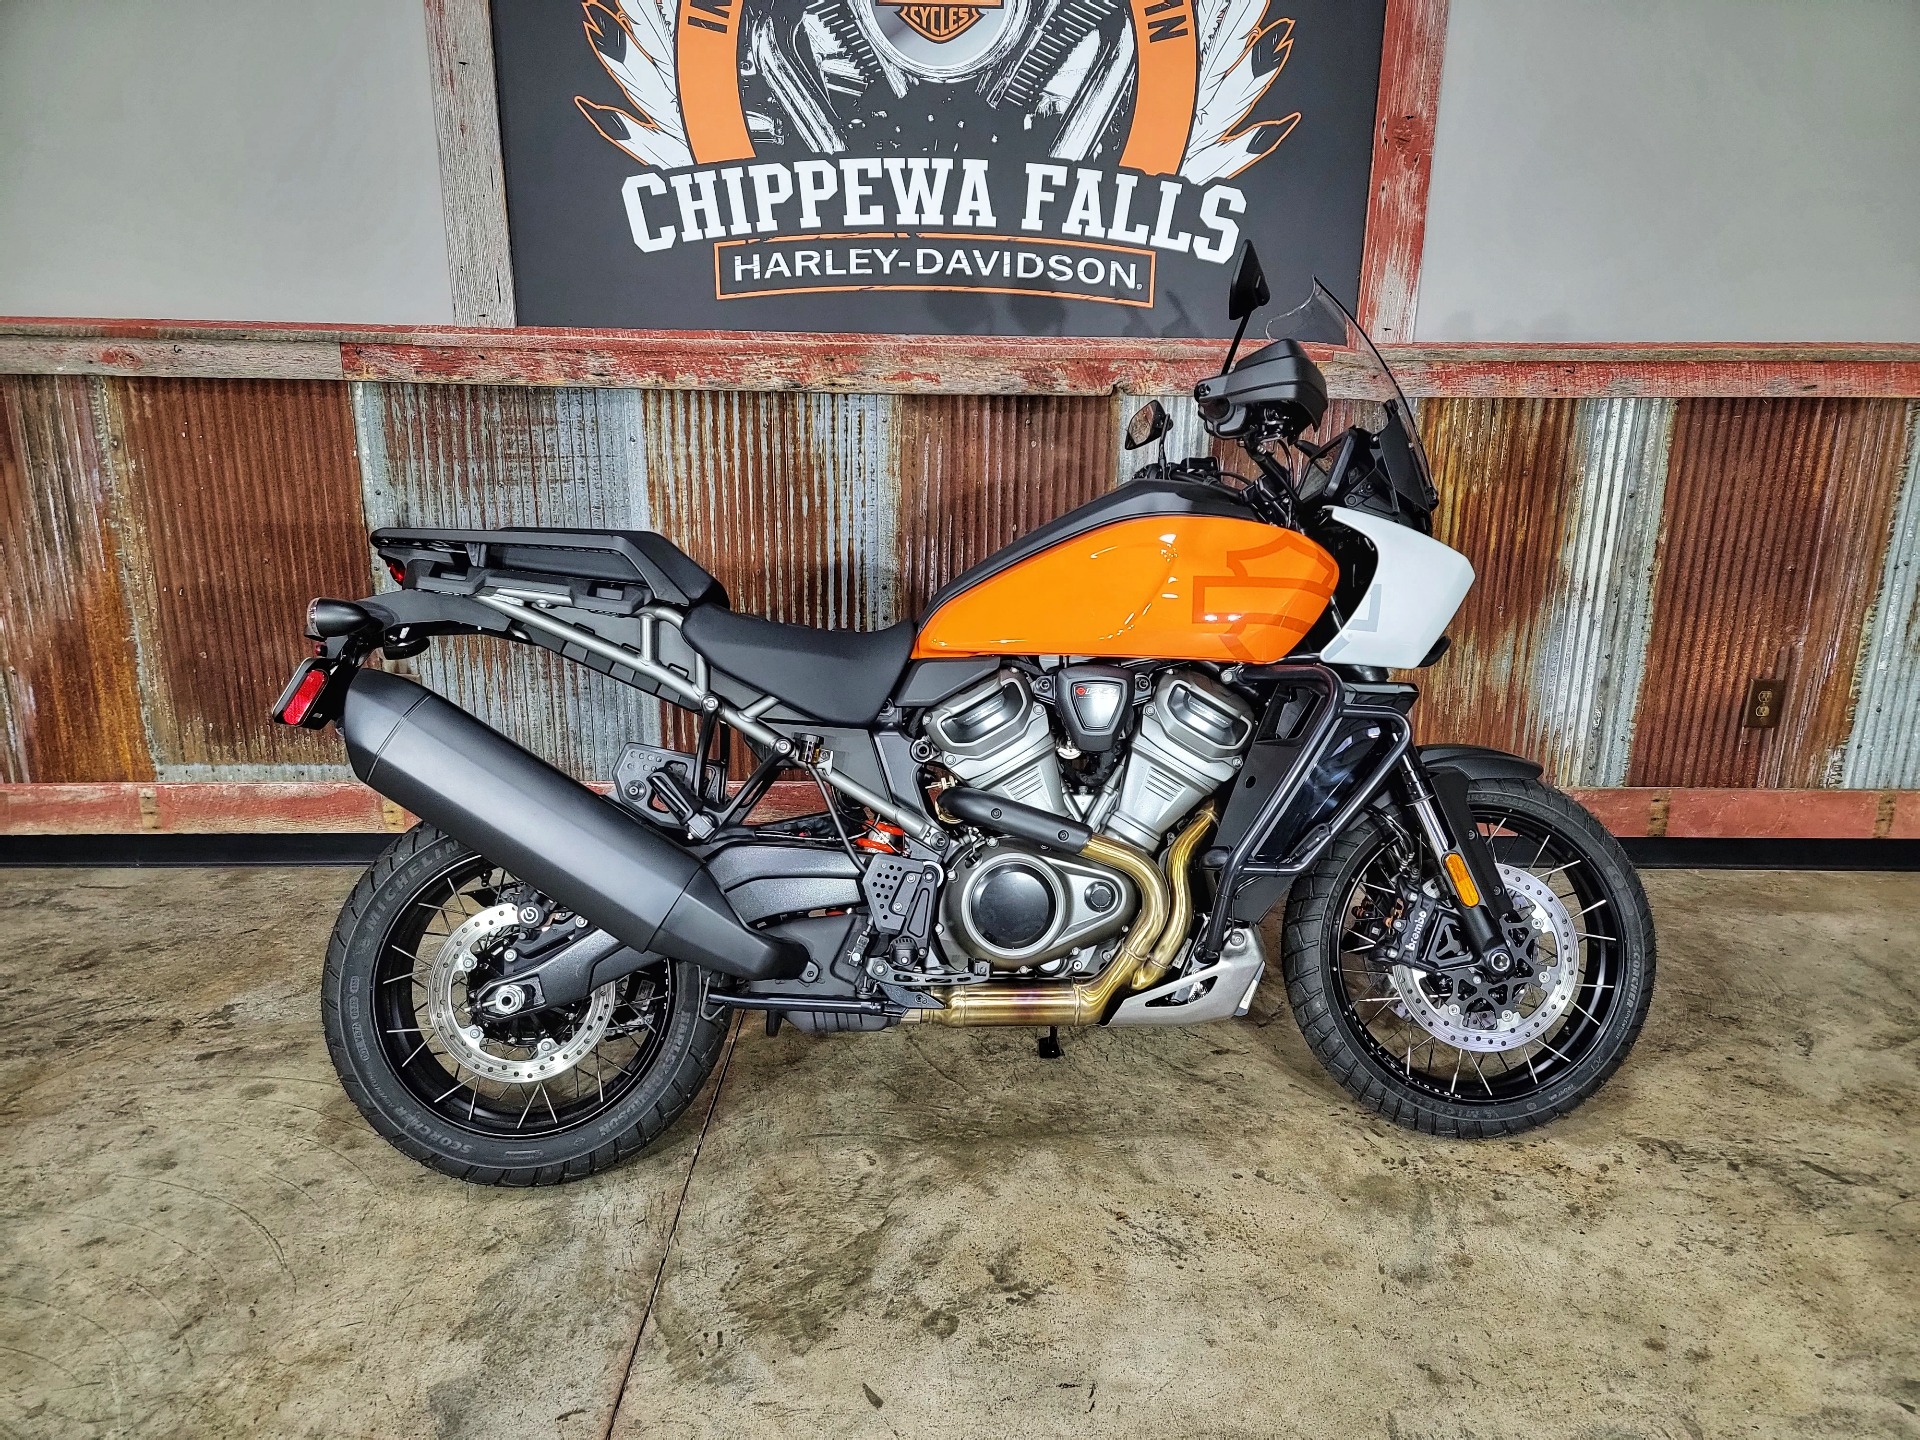 New 2021 Harley Davidson Pan America Special Baja Orange Stone Washed White Pearl Motorcycles In Chippewa Falls Wi Du305133